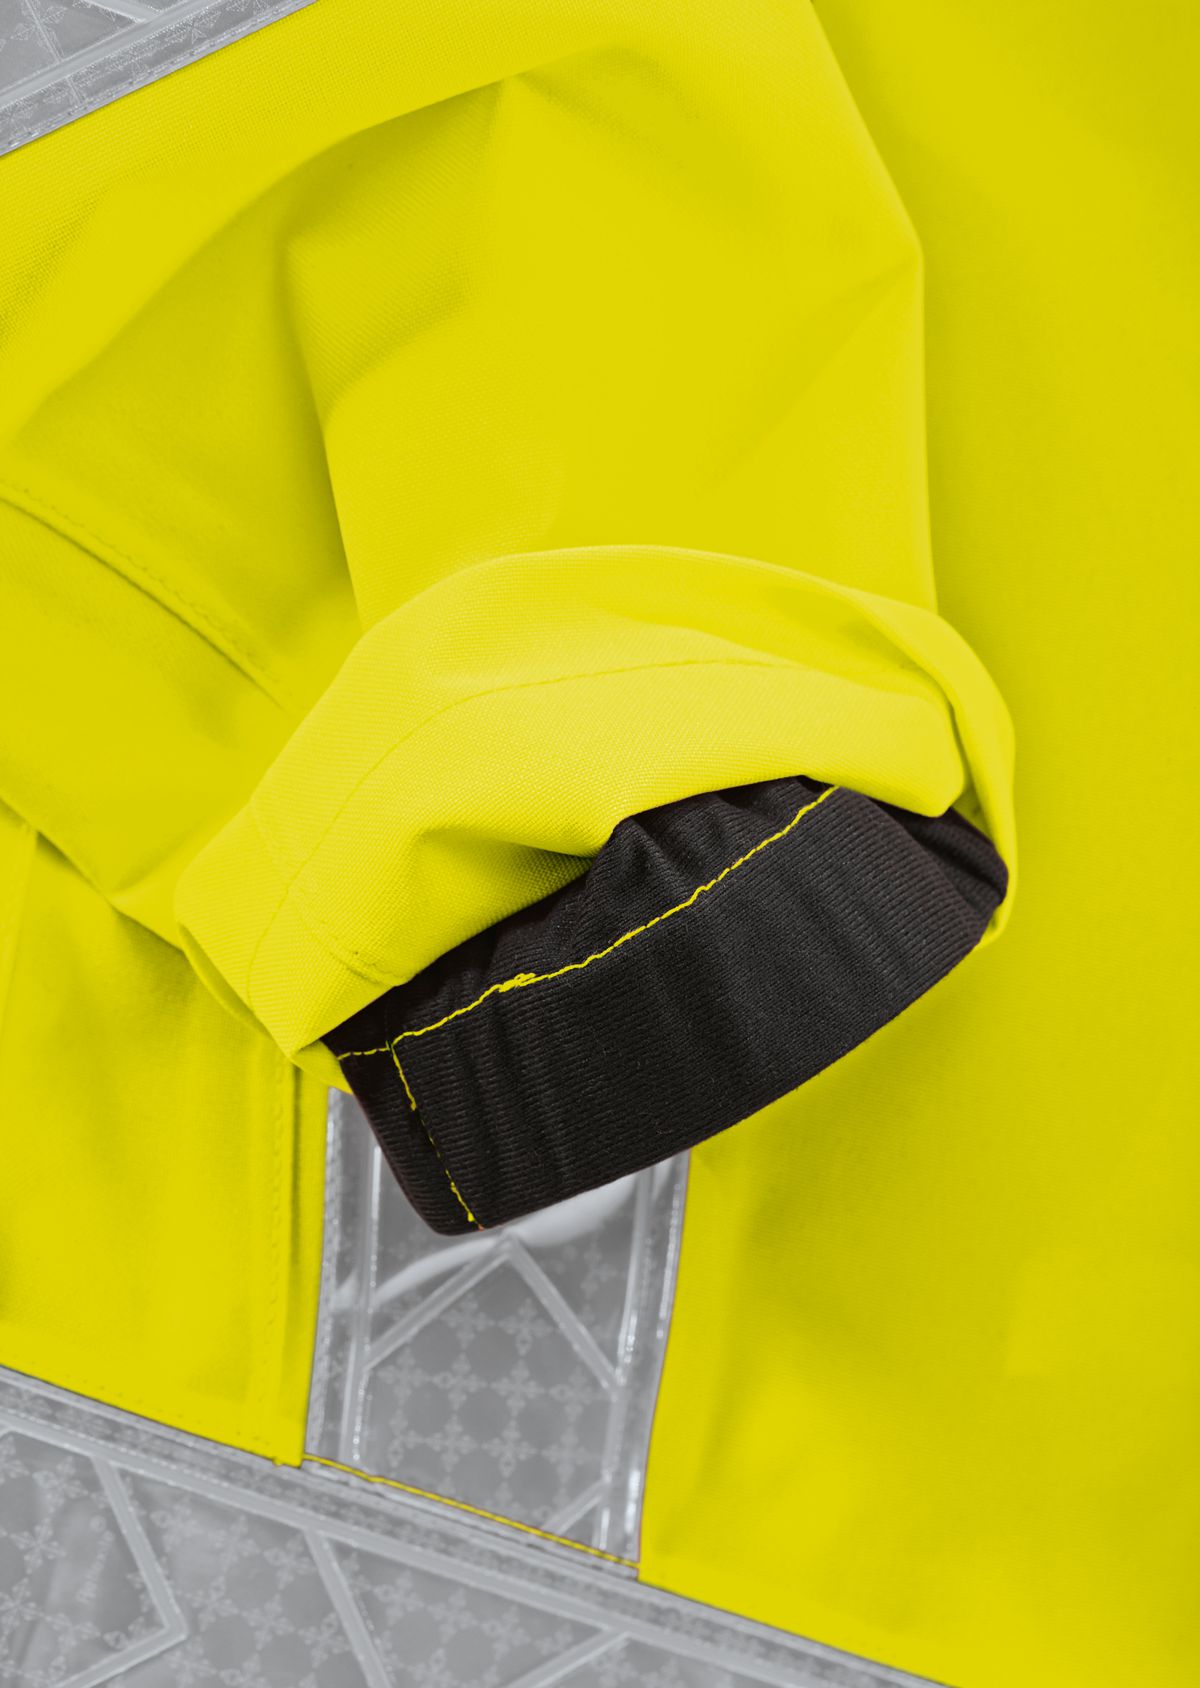 BP® High-visibility weatherproof jacket